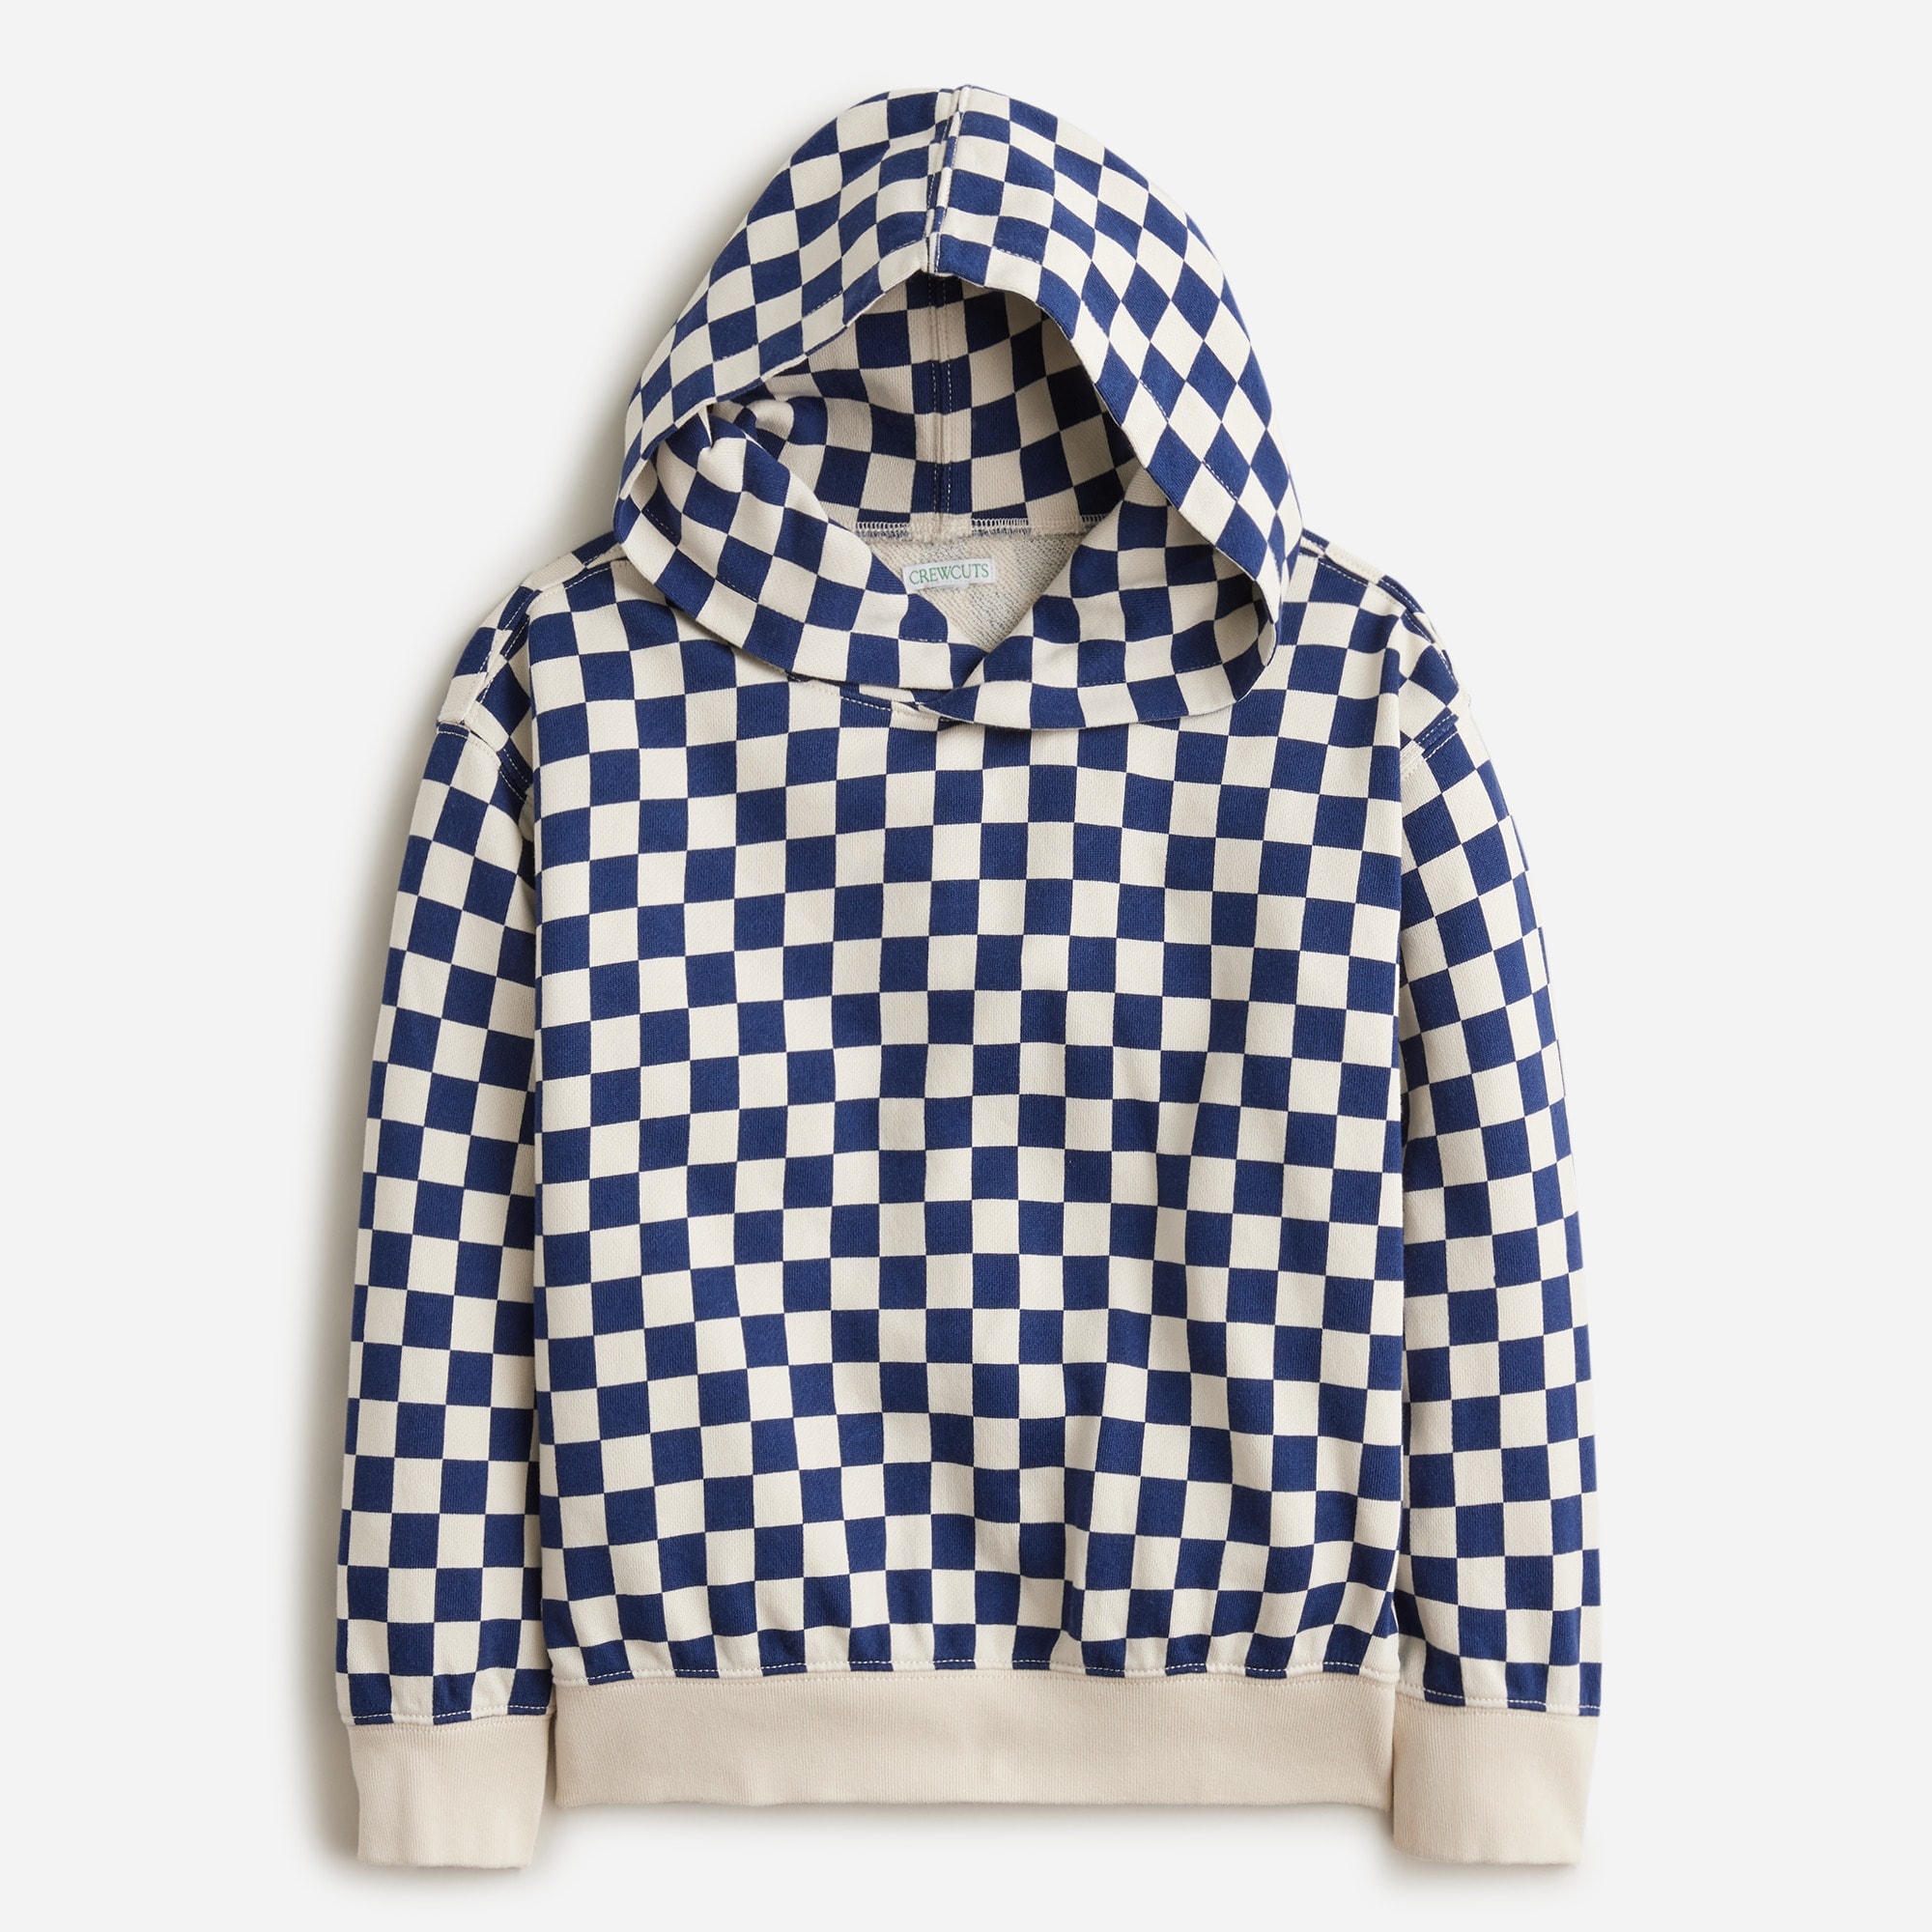  KID by crewcuts garment-dyed hoodie in checkerboard print